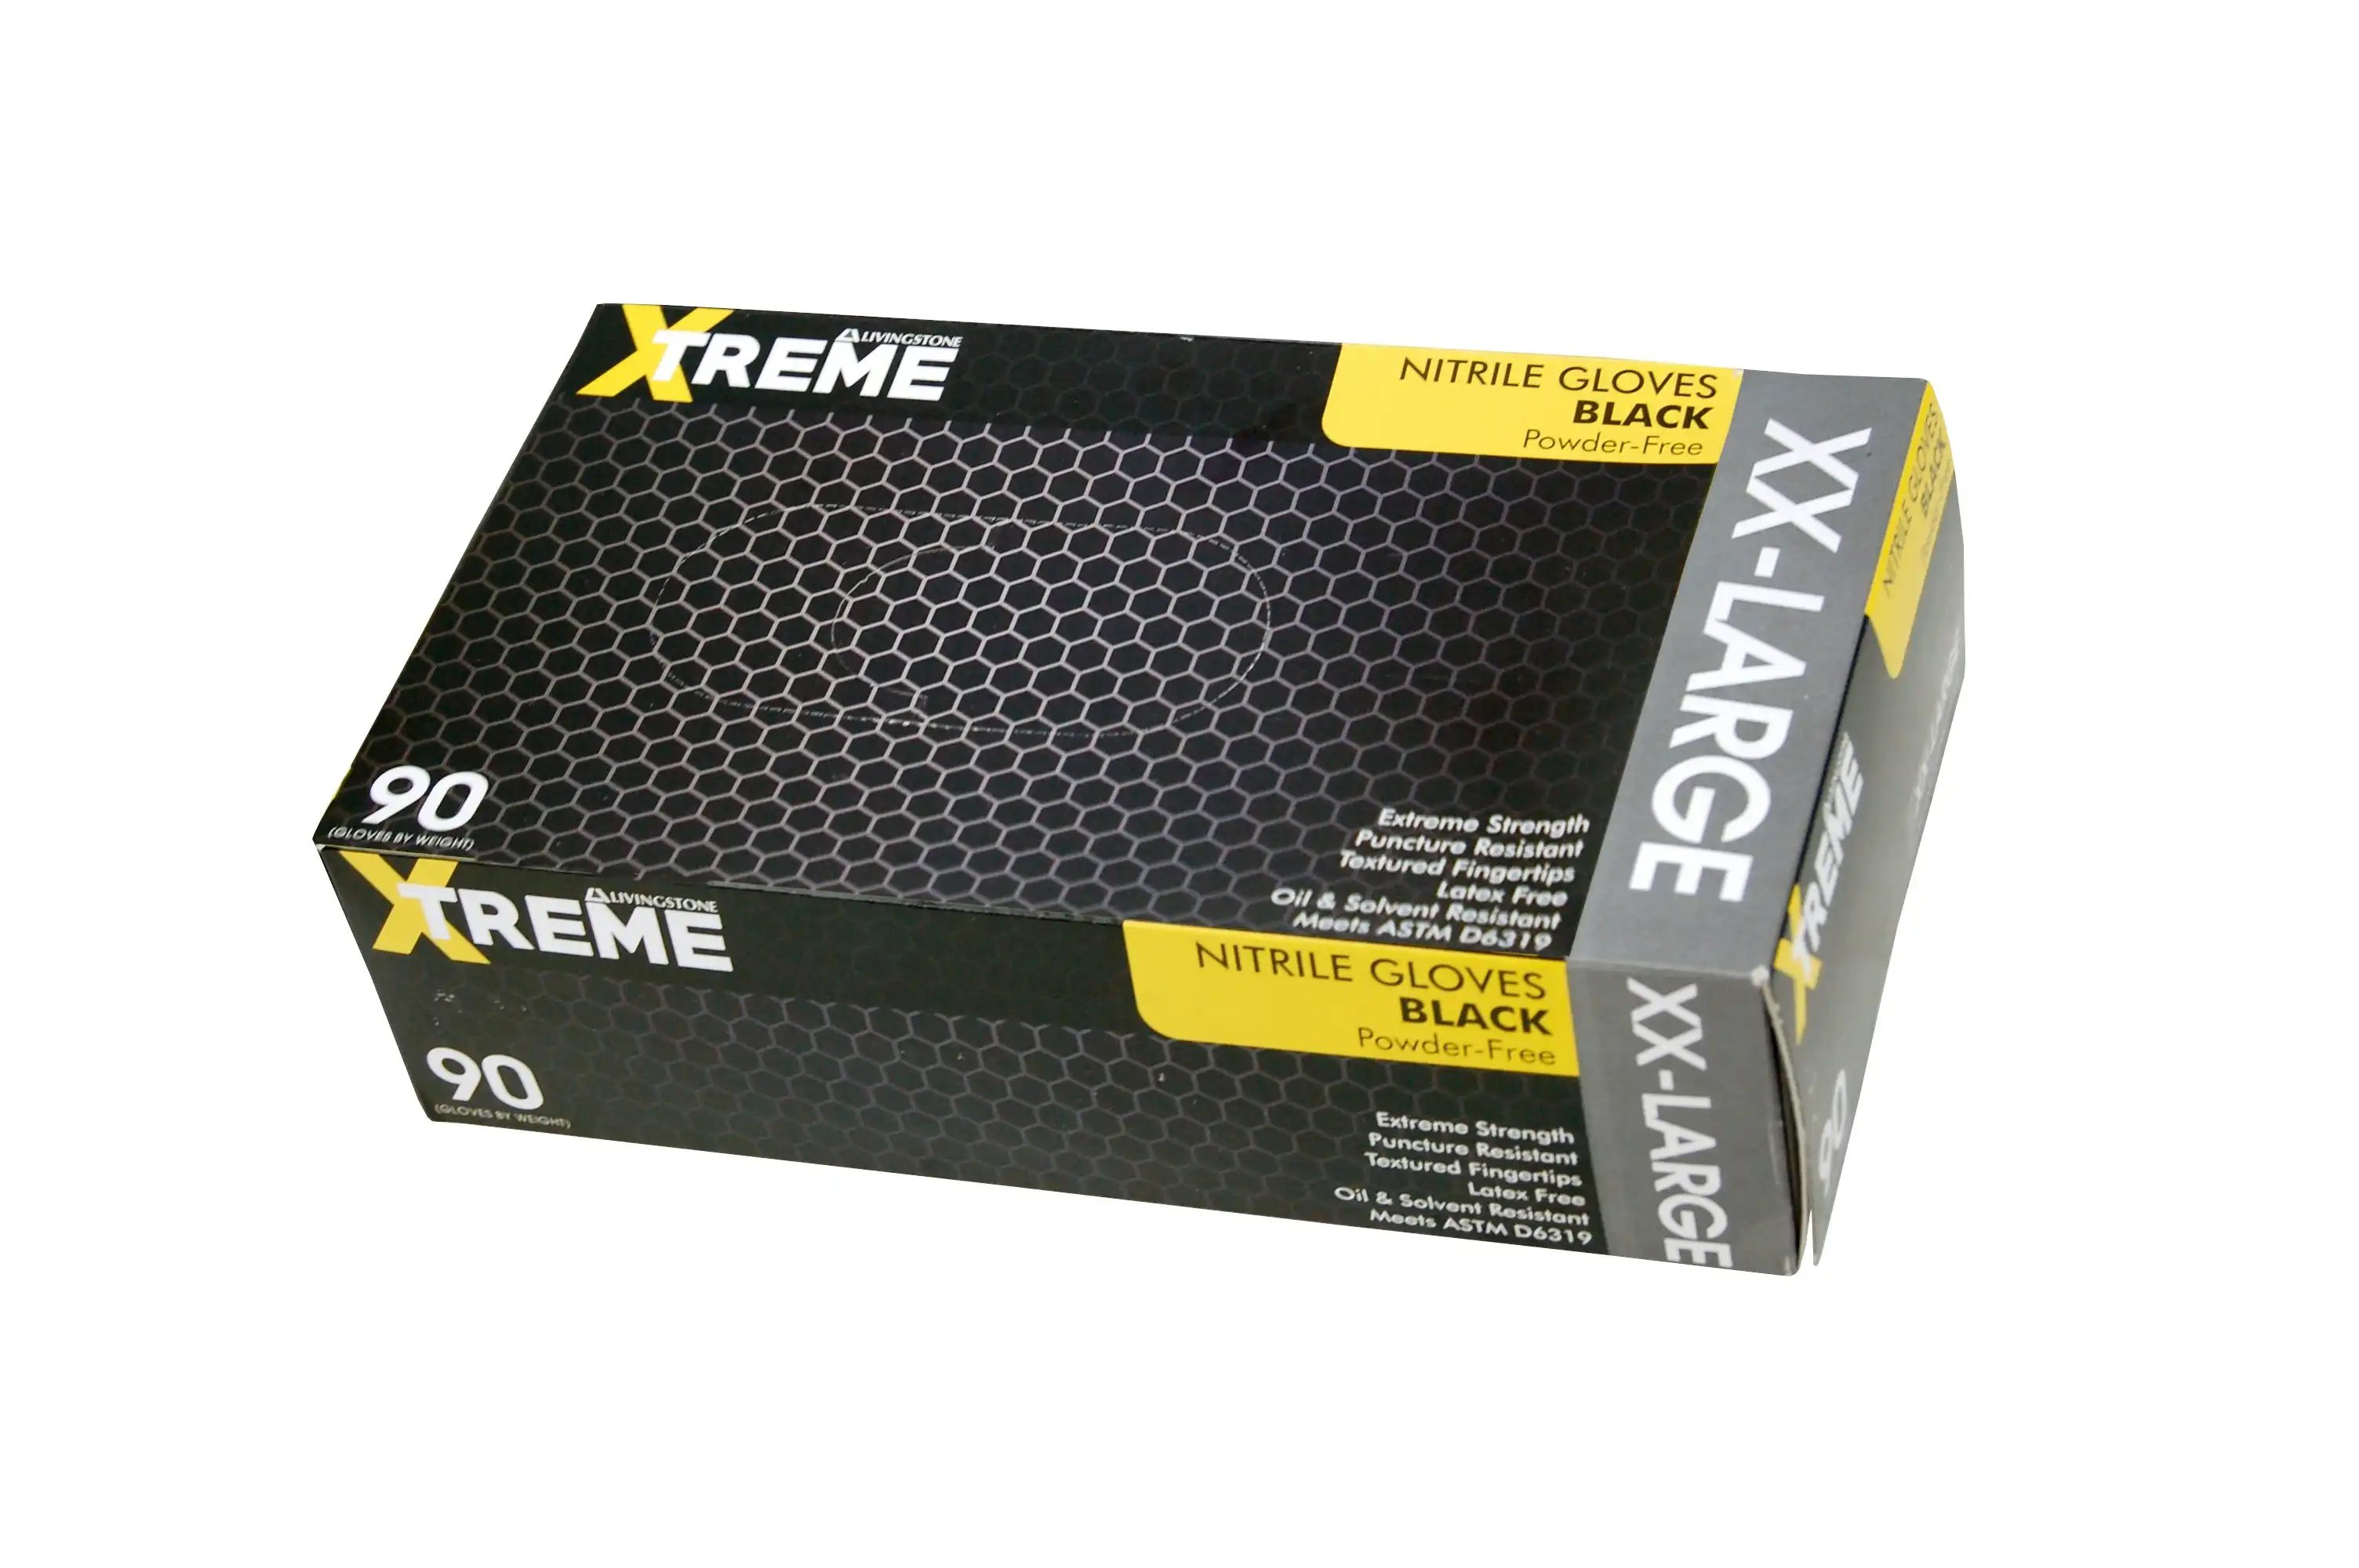 Livingstone Xtreme Thick Heavy Duty Nitrile Gloves, Powder Free, EN374, Double Extra Large, Black, 90/Box